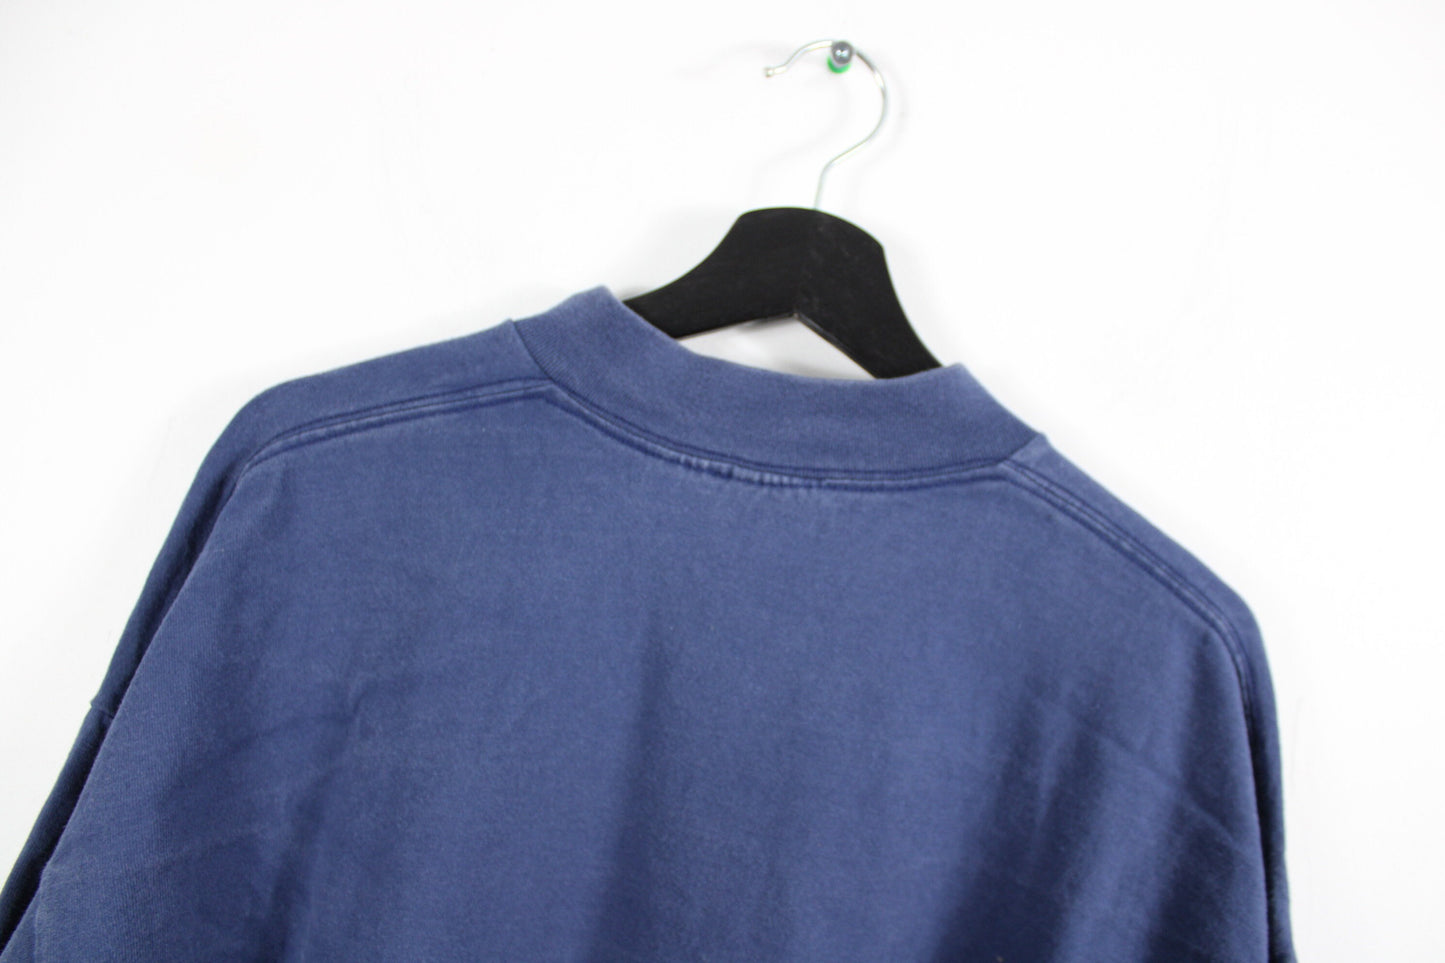 Nike-Swoosh T-Shirt / Vintage Mock-Neck Long-Sleeve Graphic Logo Tee Shirt / 90s Hip Hop Clothing / Streetwear